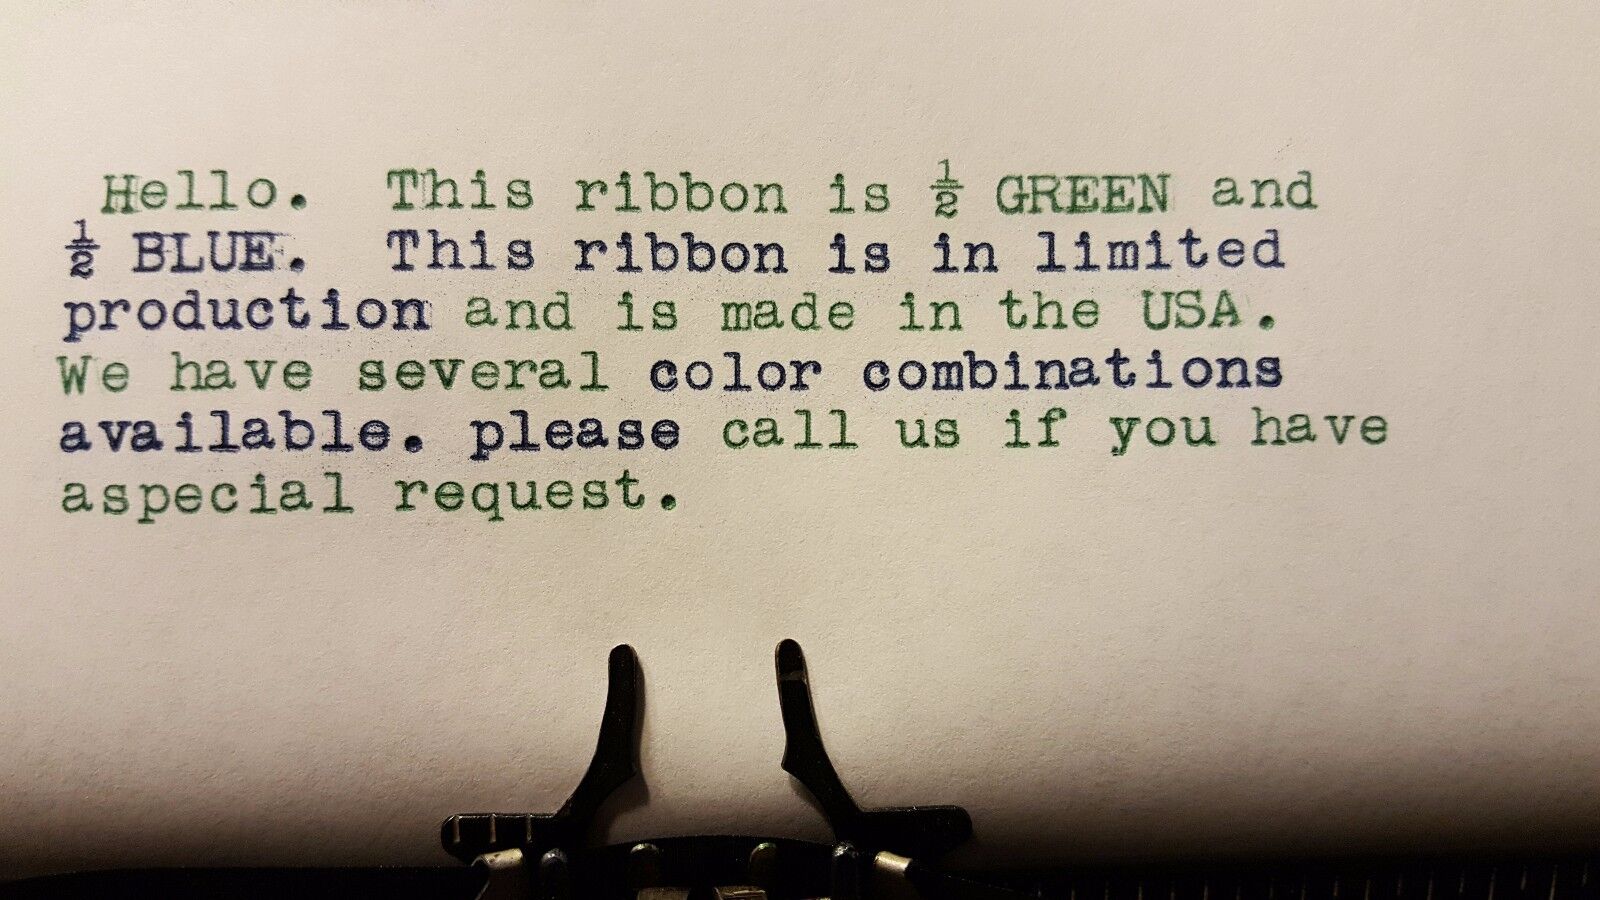 Universal Typewriter Ink Ribbon - Blue and Green Ink Ribbon - Made in USA